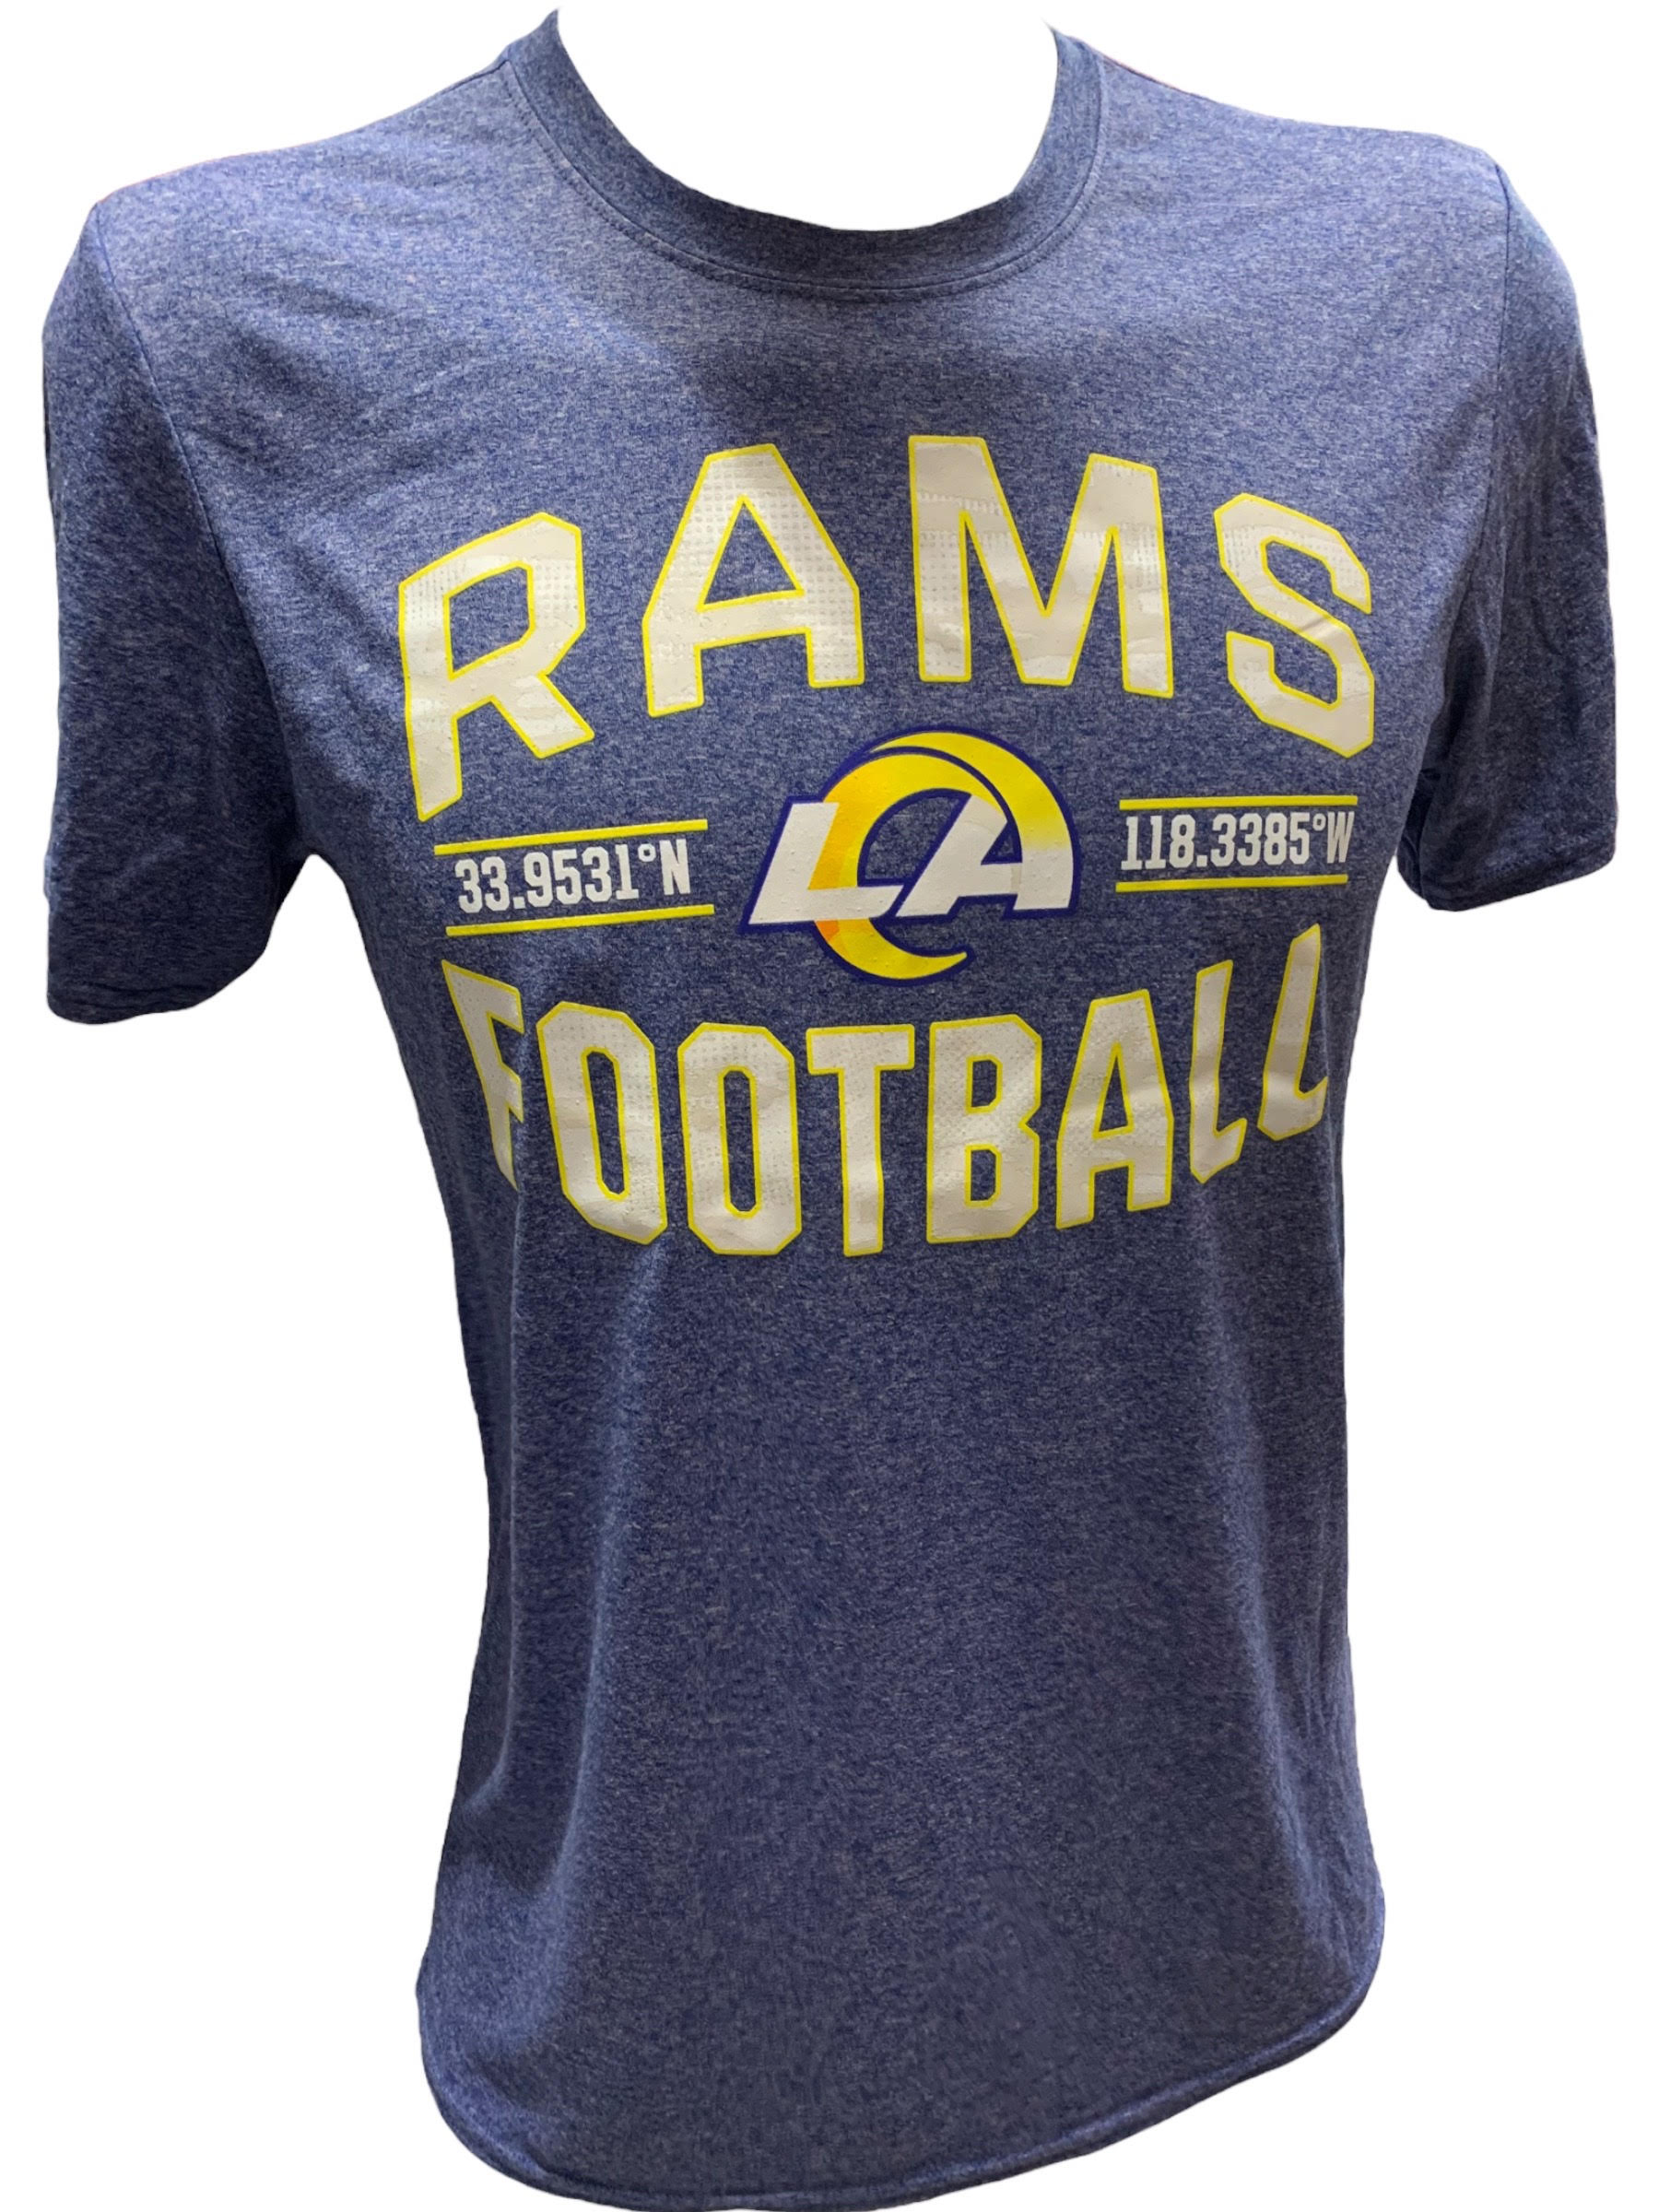 Cheap Los Angeles Rams Apparel, Discount Rams Gear, NFL Rams